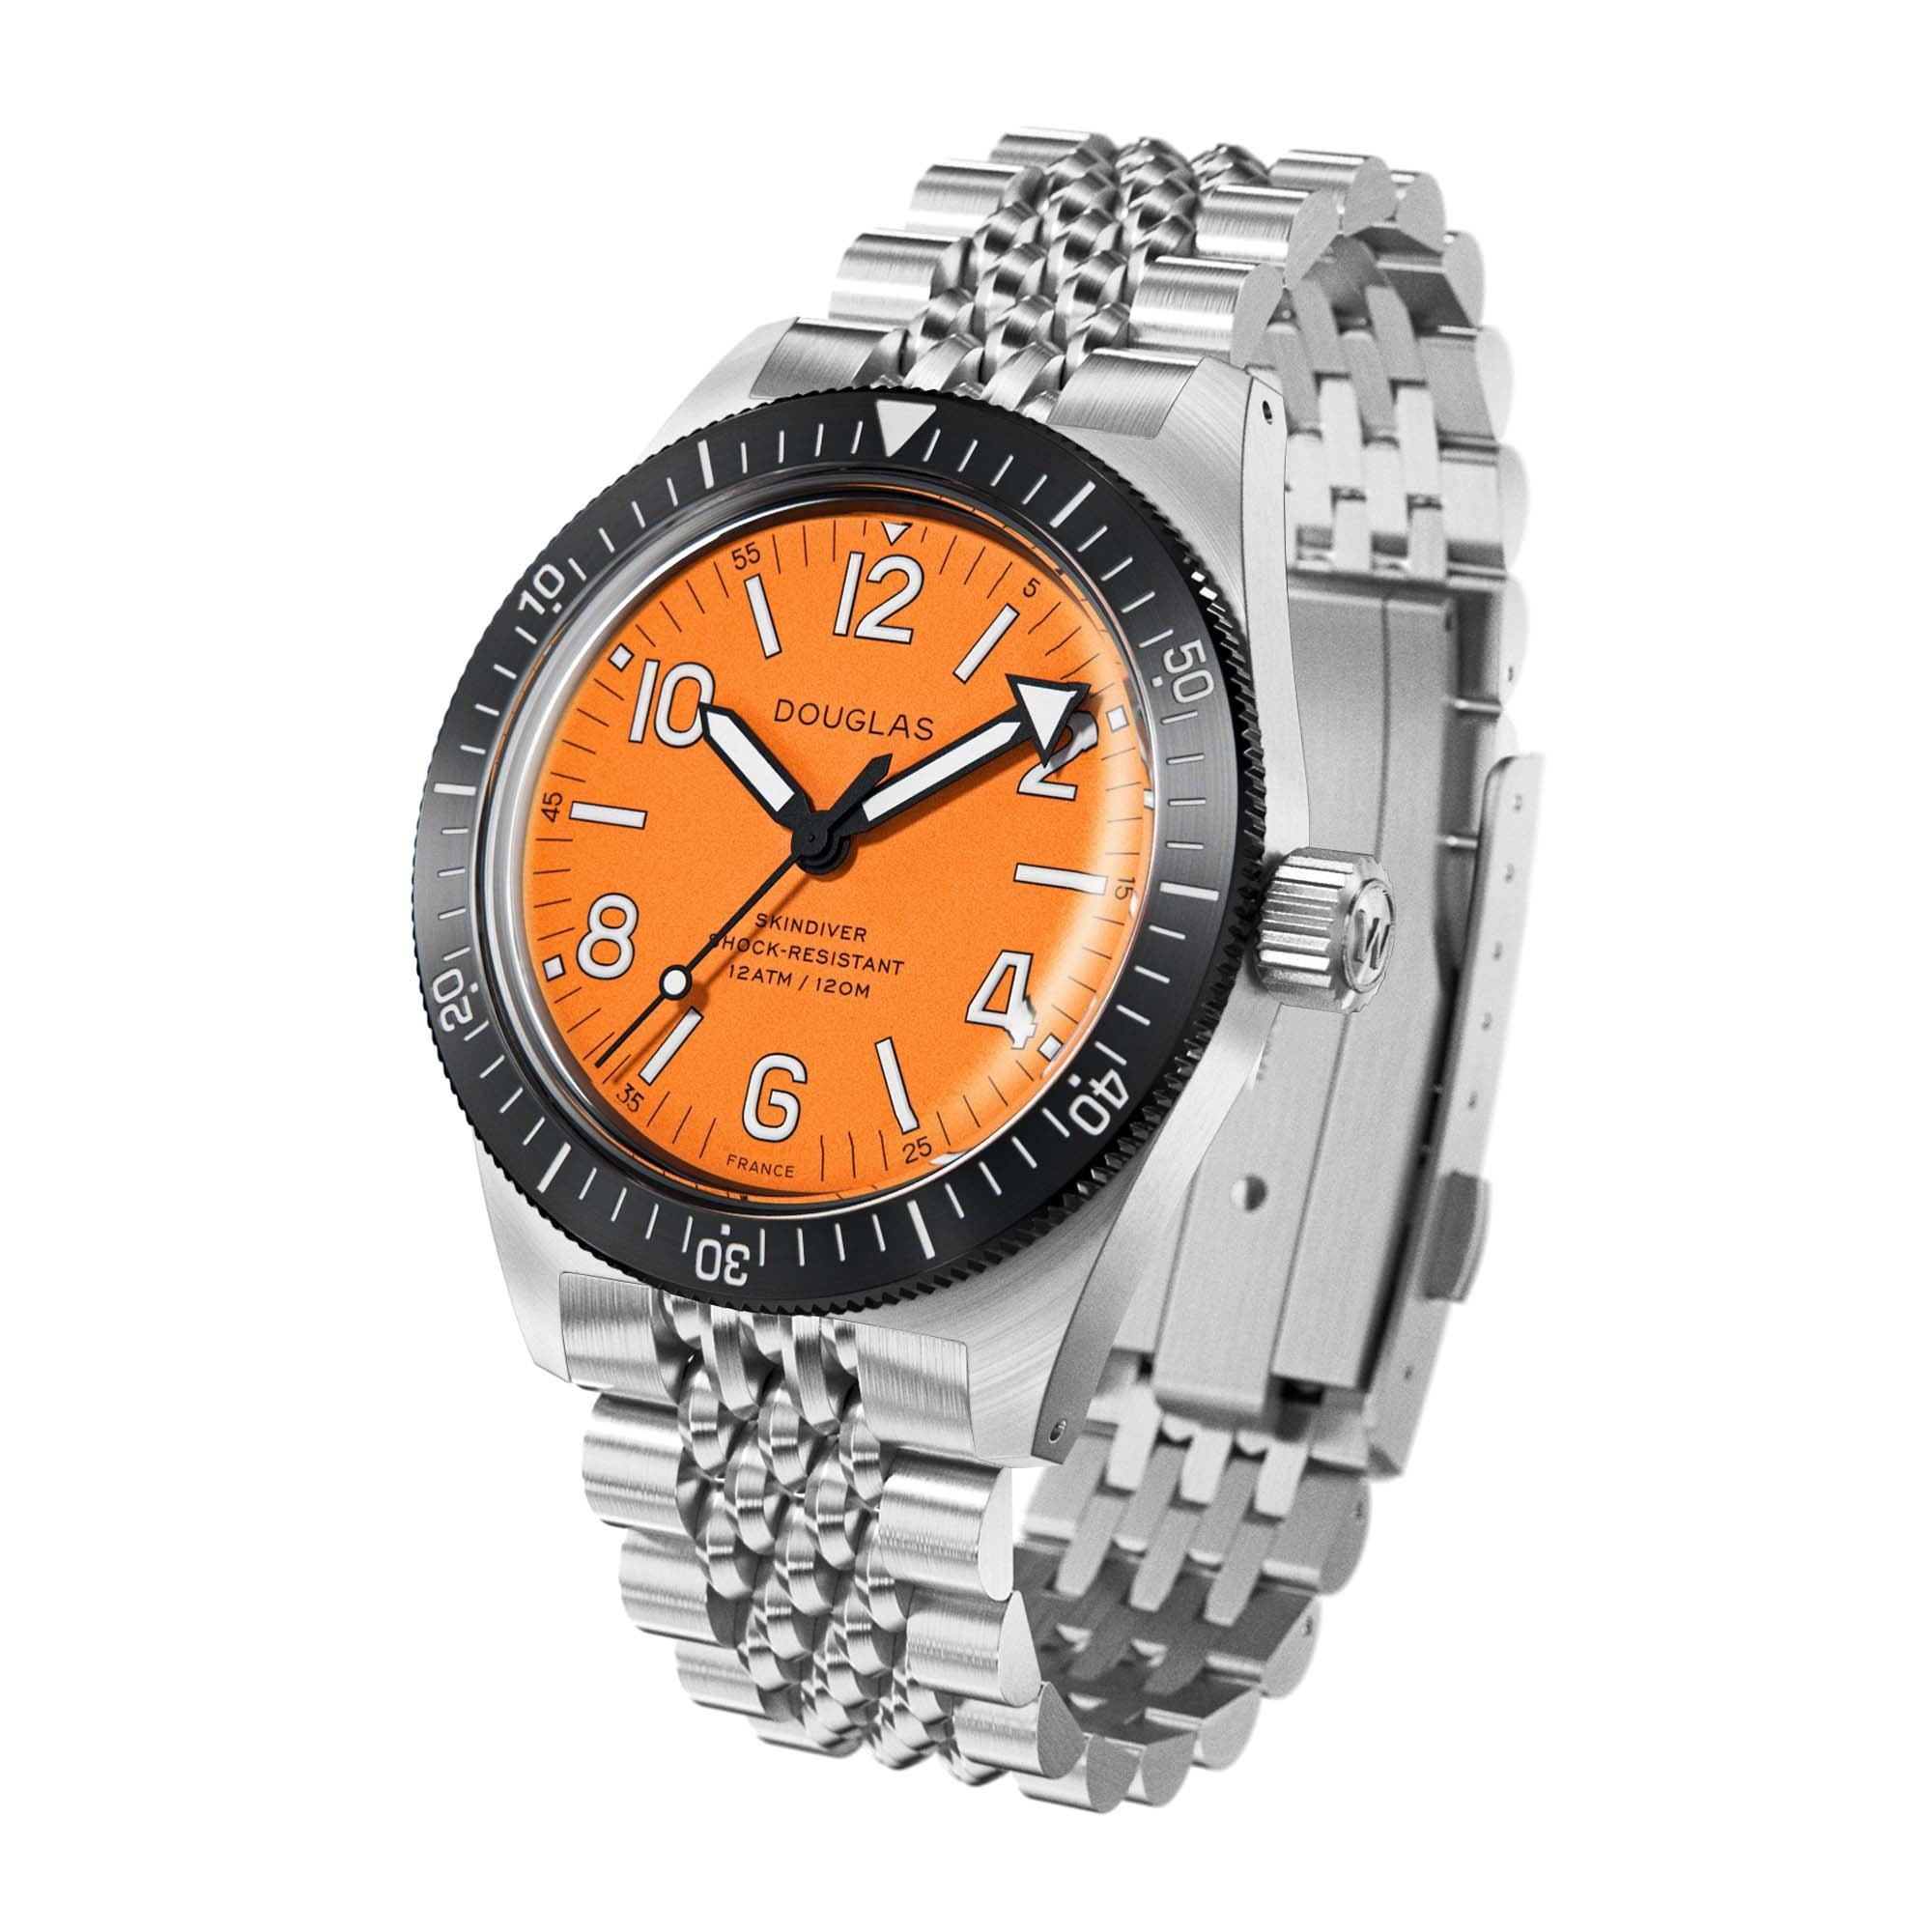 Skindiver Professional Bracelet Tool-Watch - Orange Dial